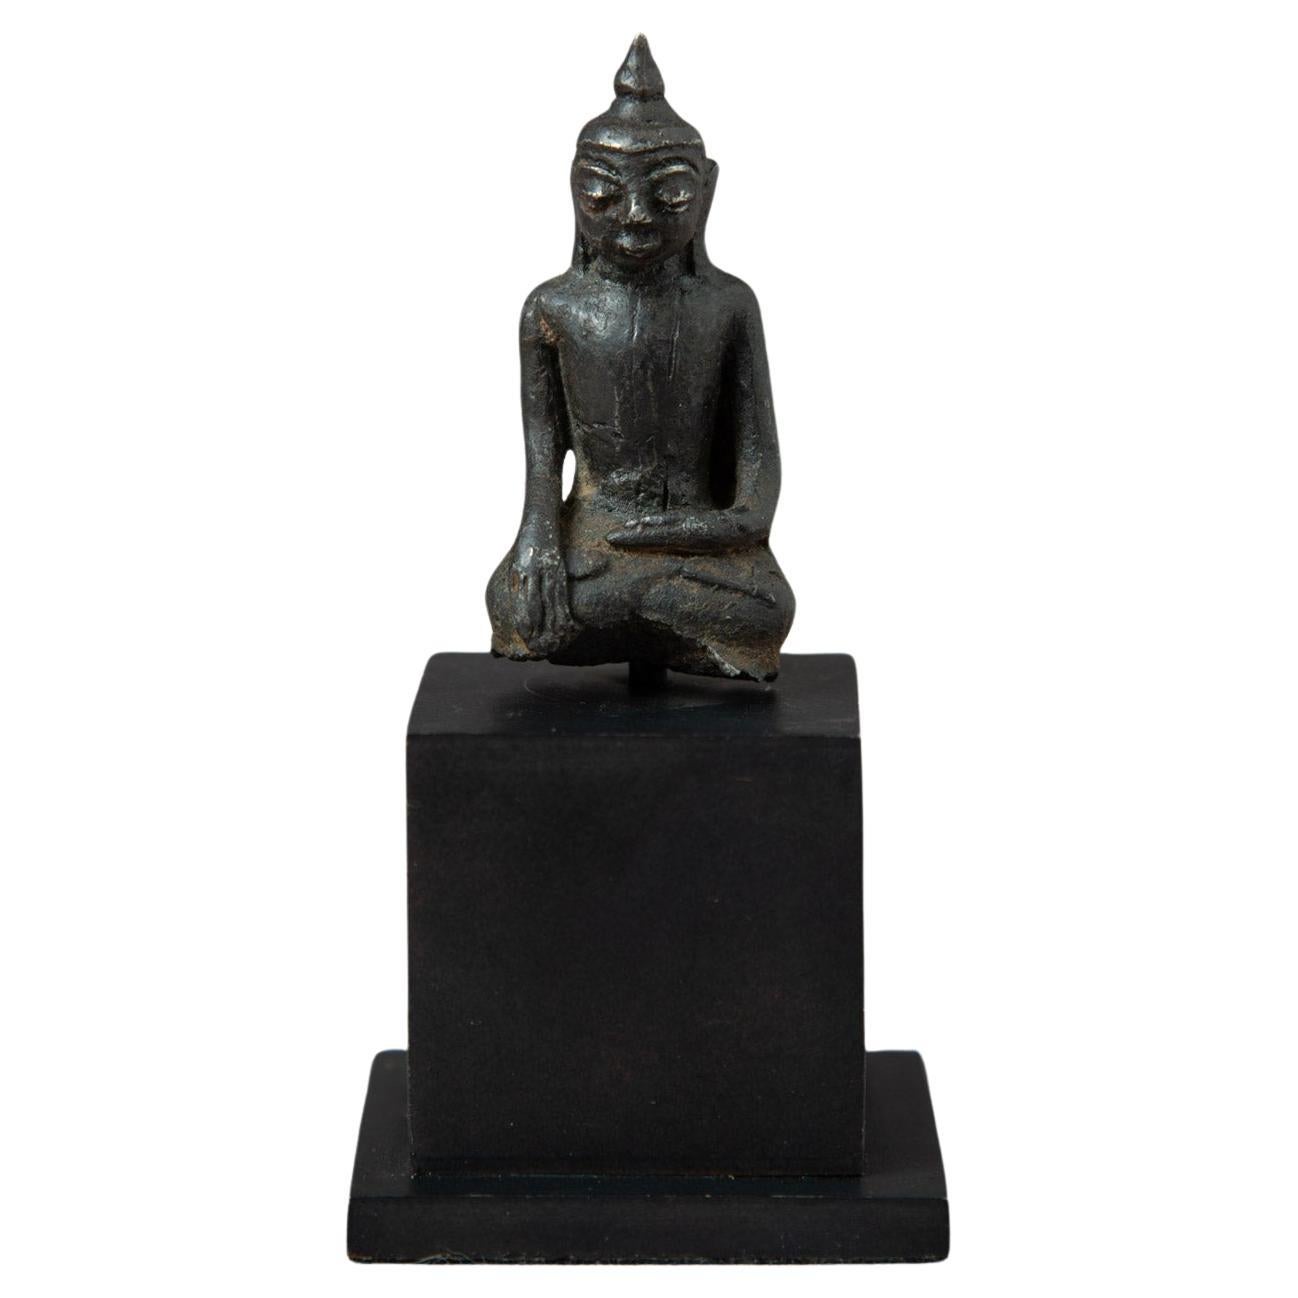 16-17th century Antique bronze Burmese Buddha statue - OriginalBuddhas